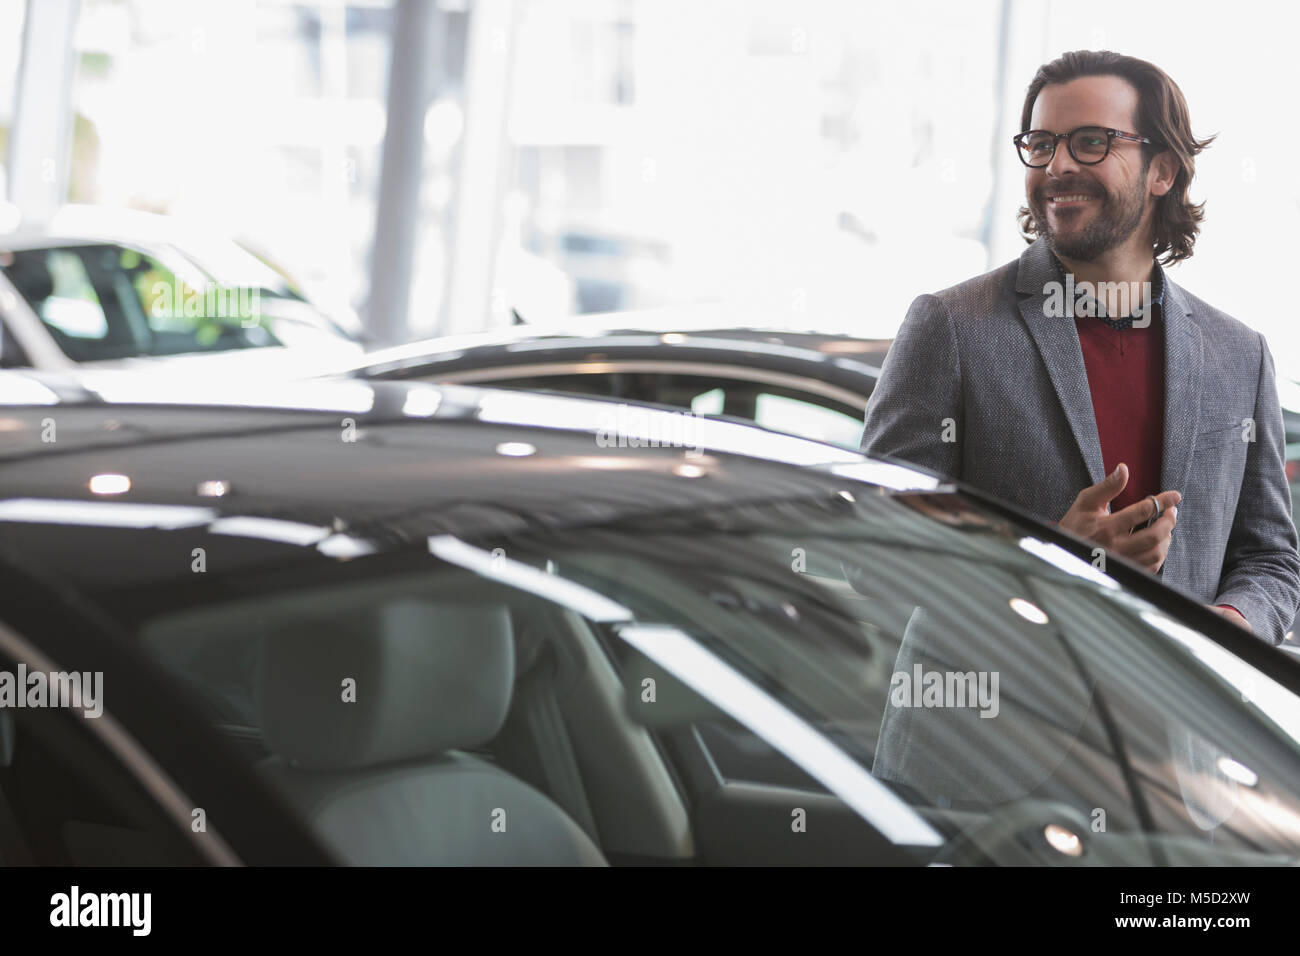 Smiling man browsing at new cars in car dealership showroom Stock Photo